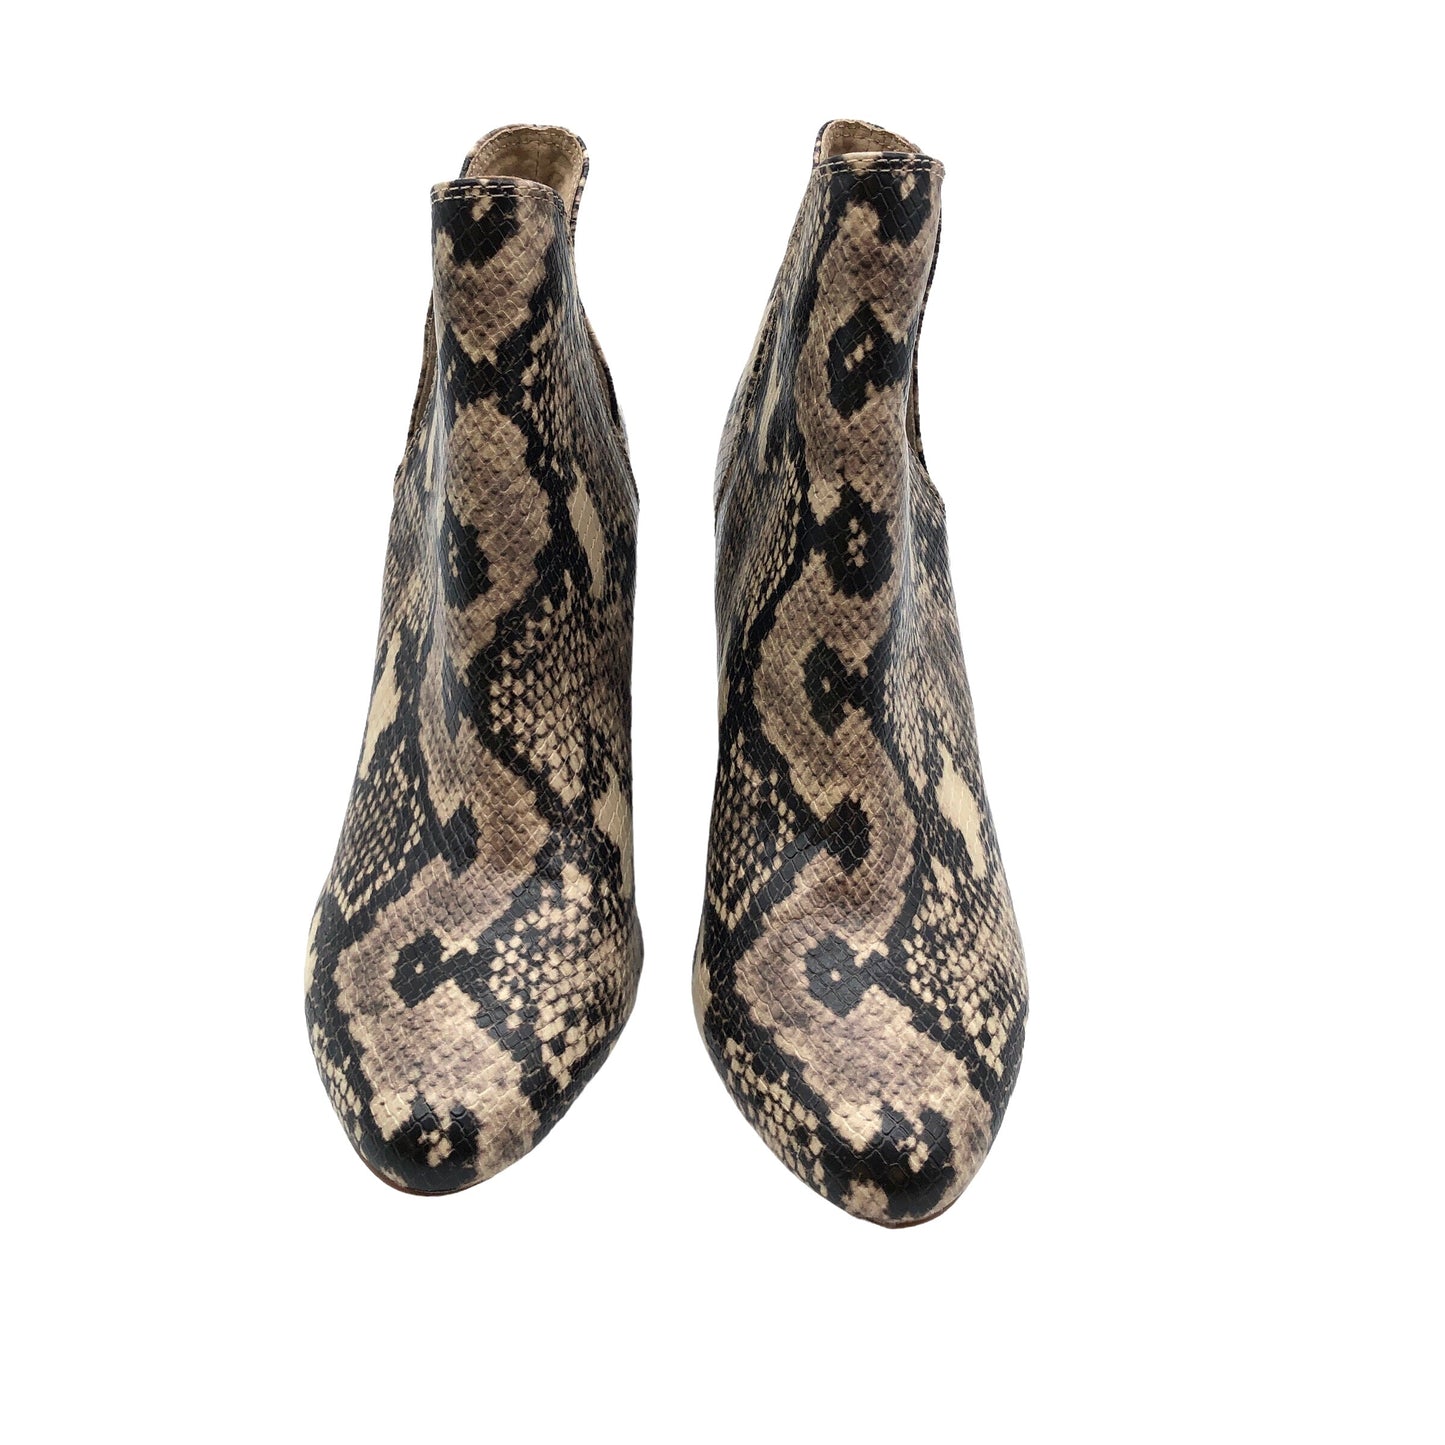 Snakeskin Print Boots Ankle Heels Steve Madden, Size 7.5